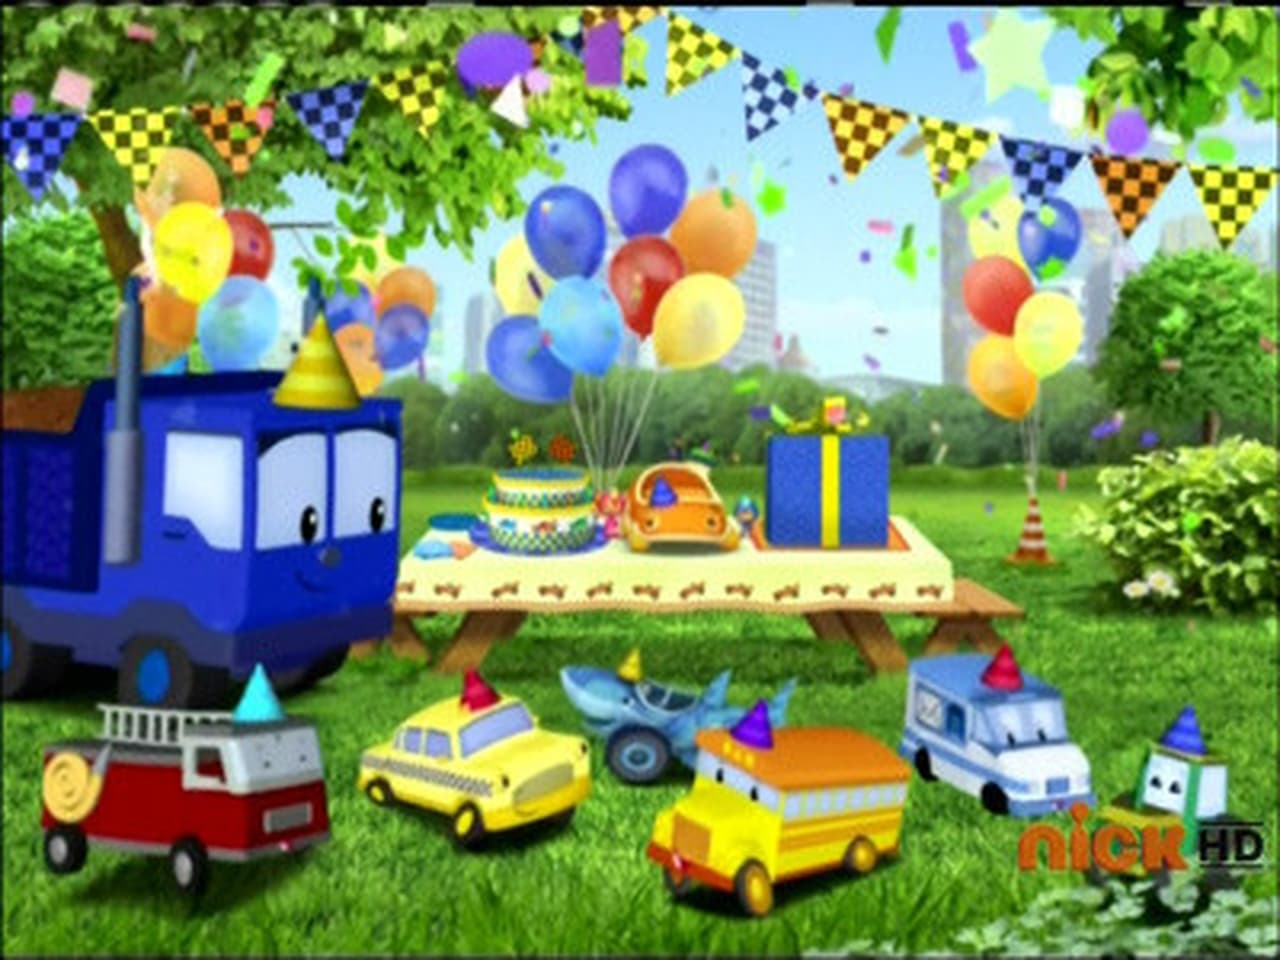 UmiCars Birthday Present